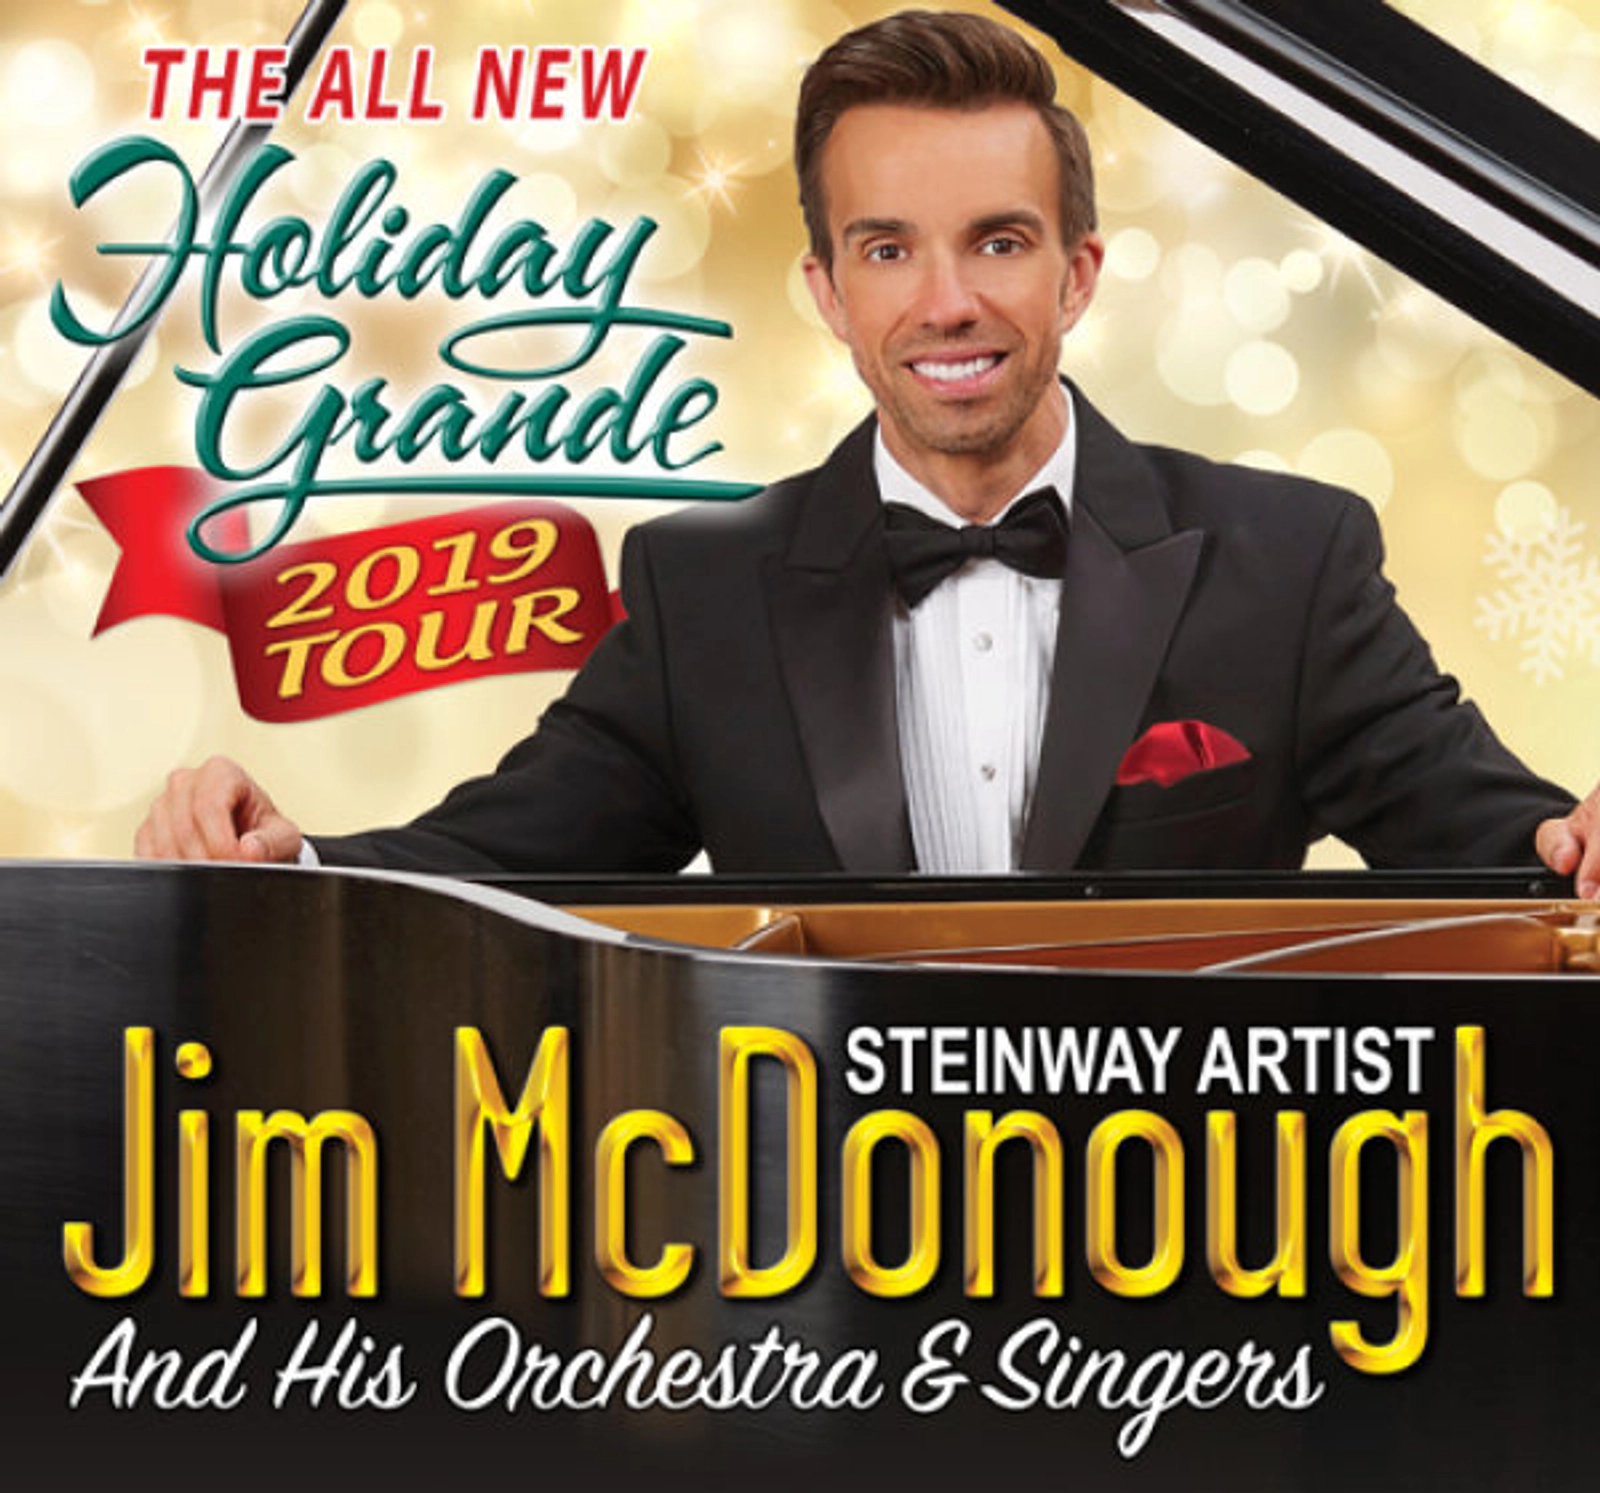 Win Tickets to Jim McDonough's Holiday Grand Tour - Thumbnail Image